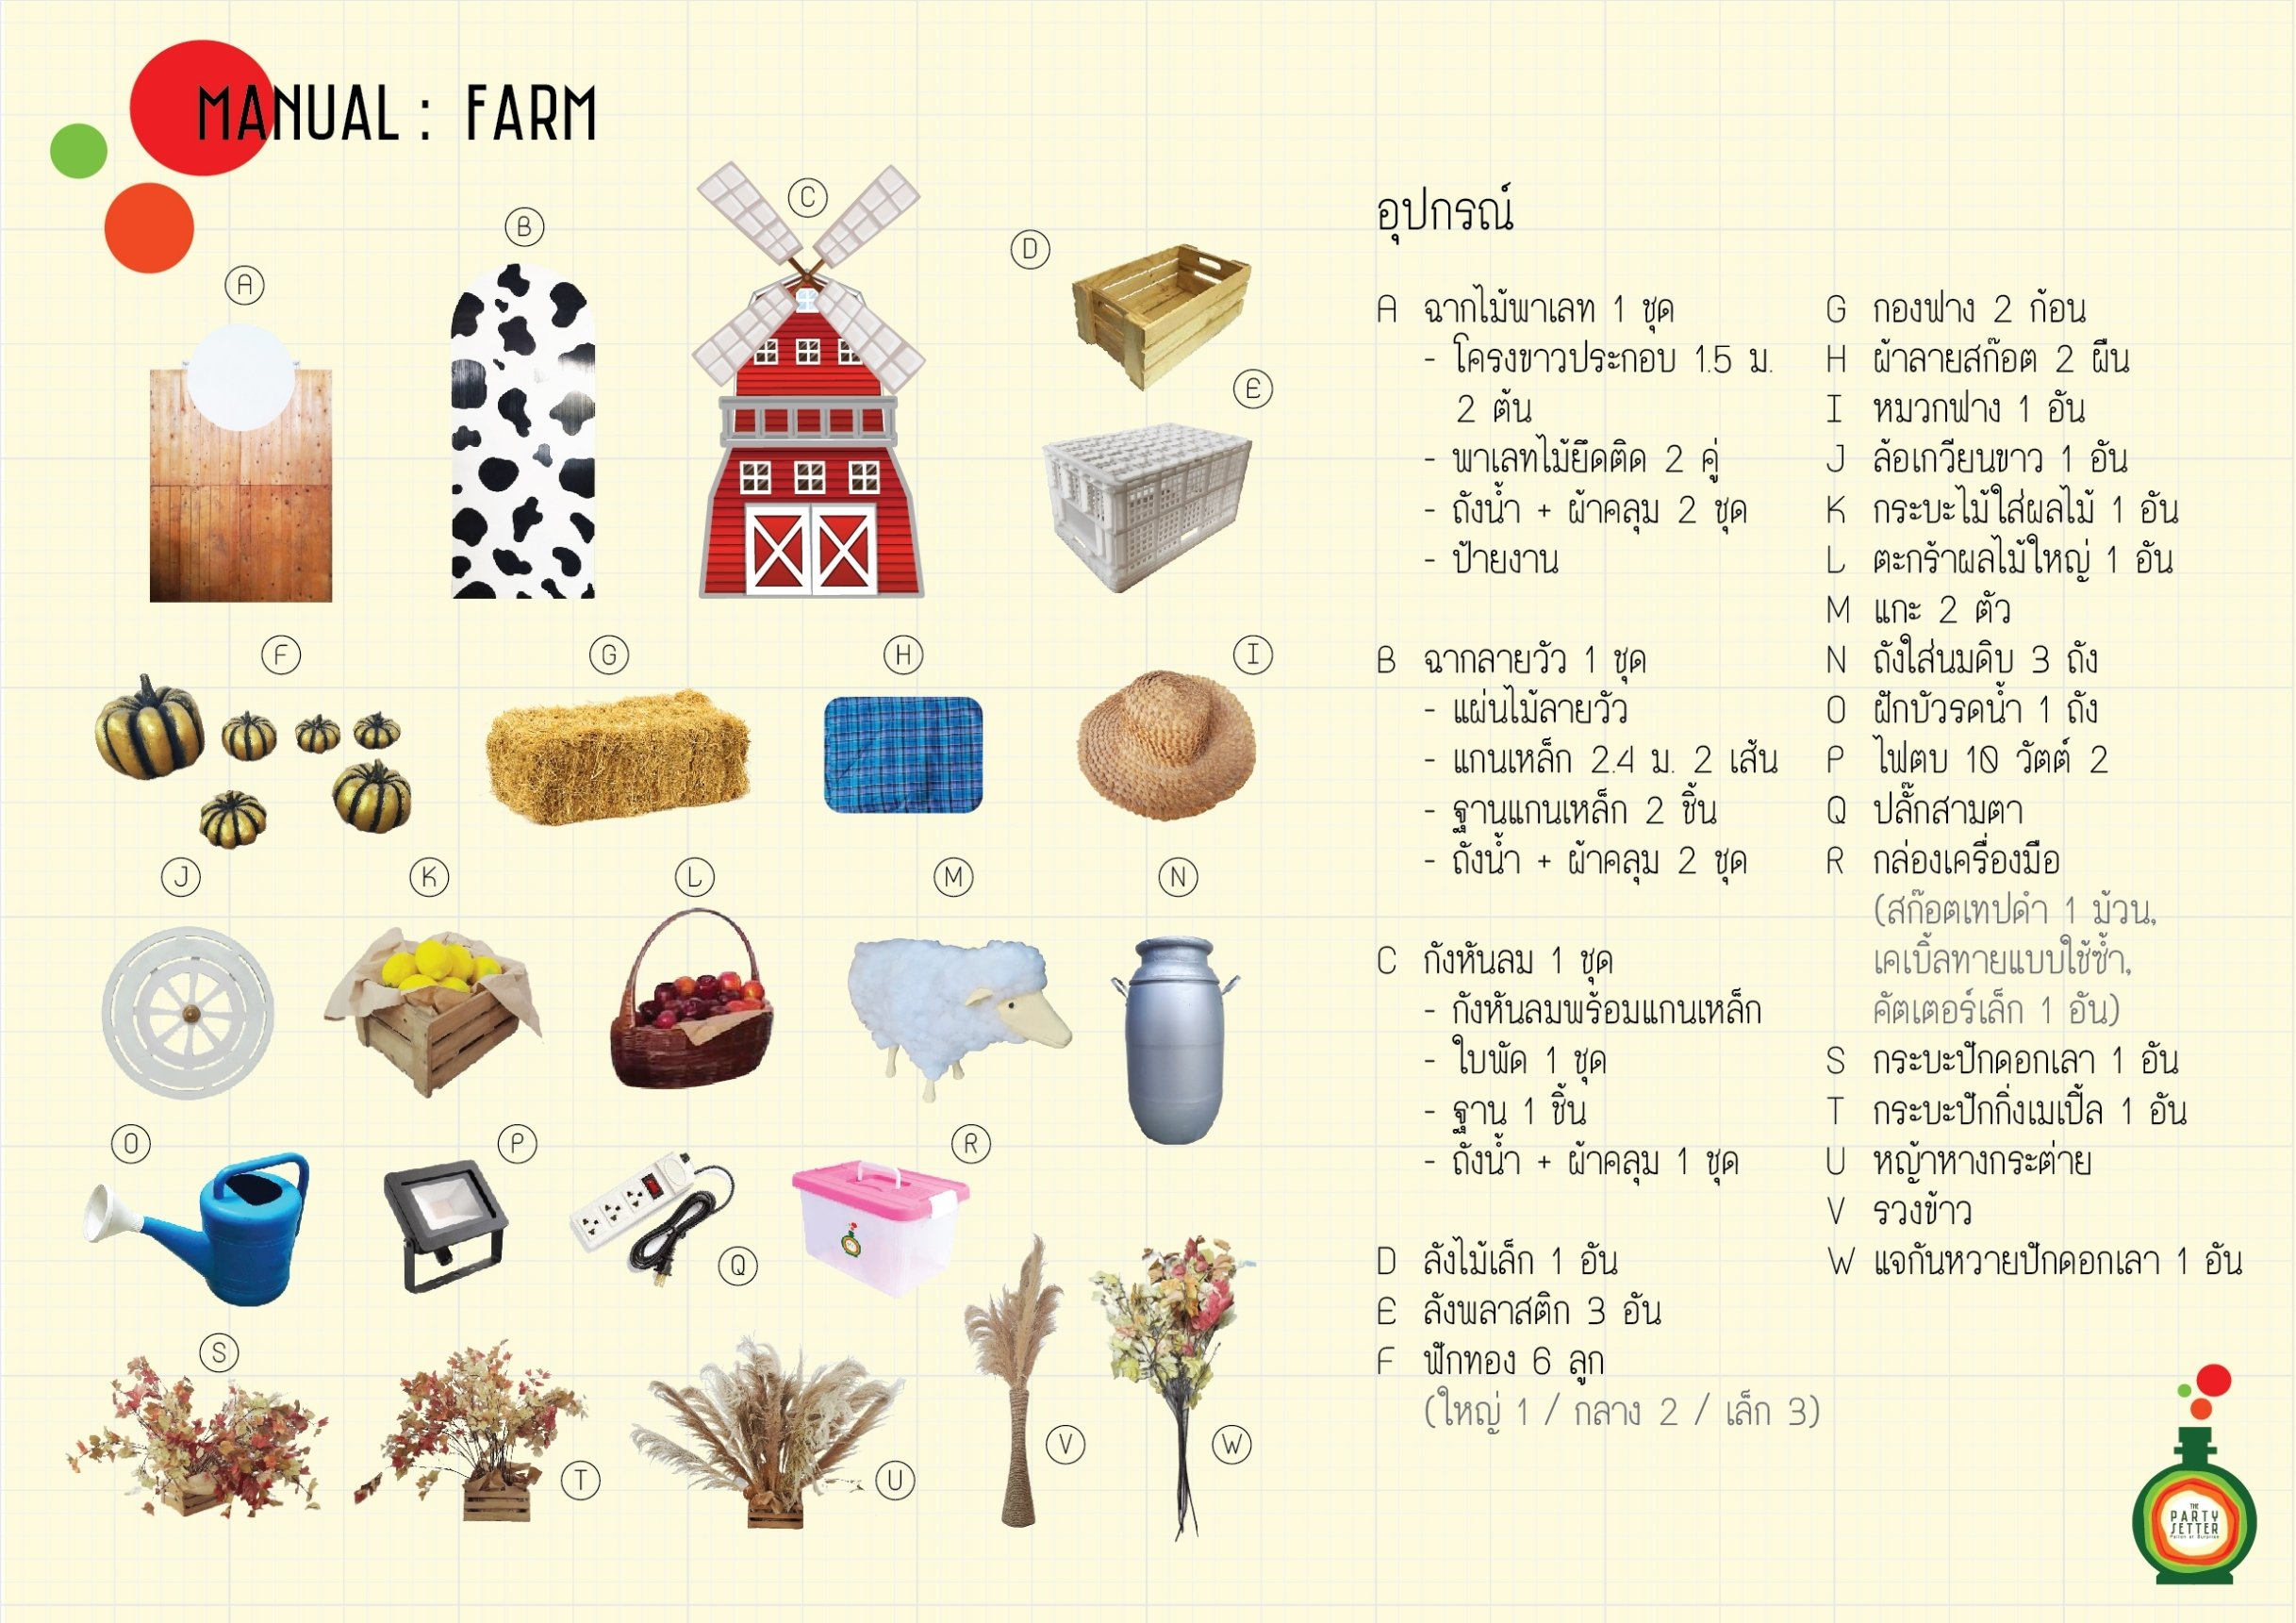 Manual_Farm_00-01.jpg